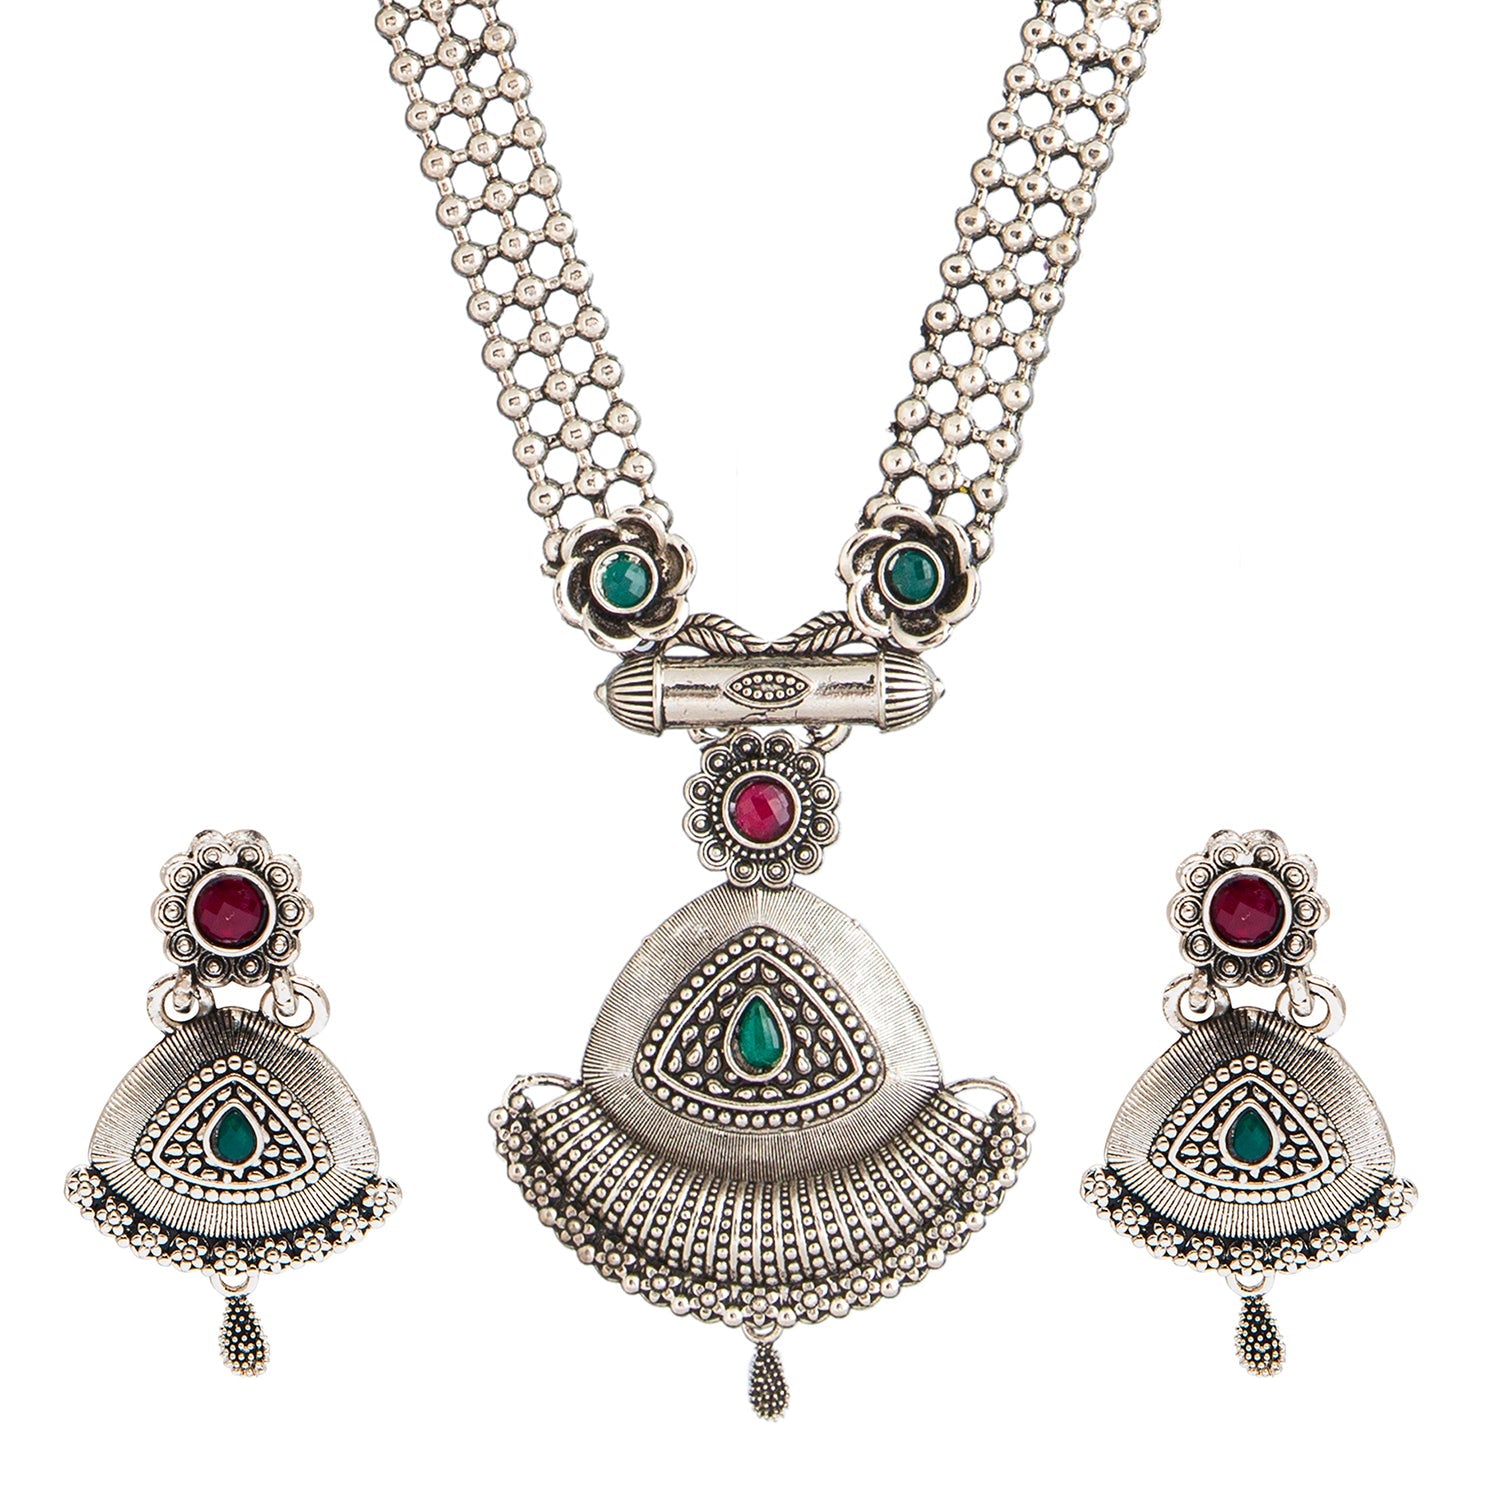 Antique Indian Silver Jewelry - Durango Silver Company